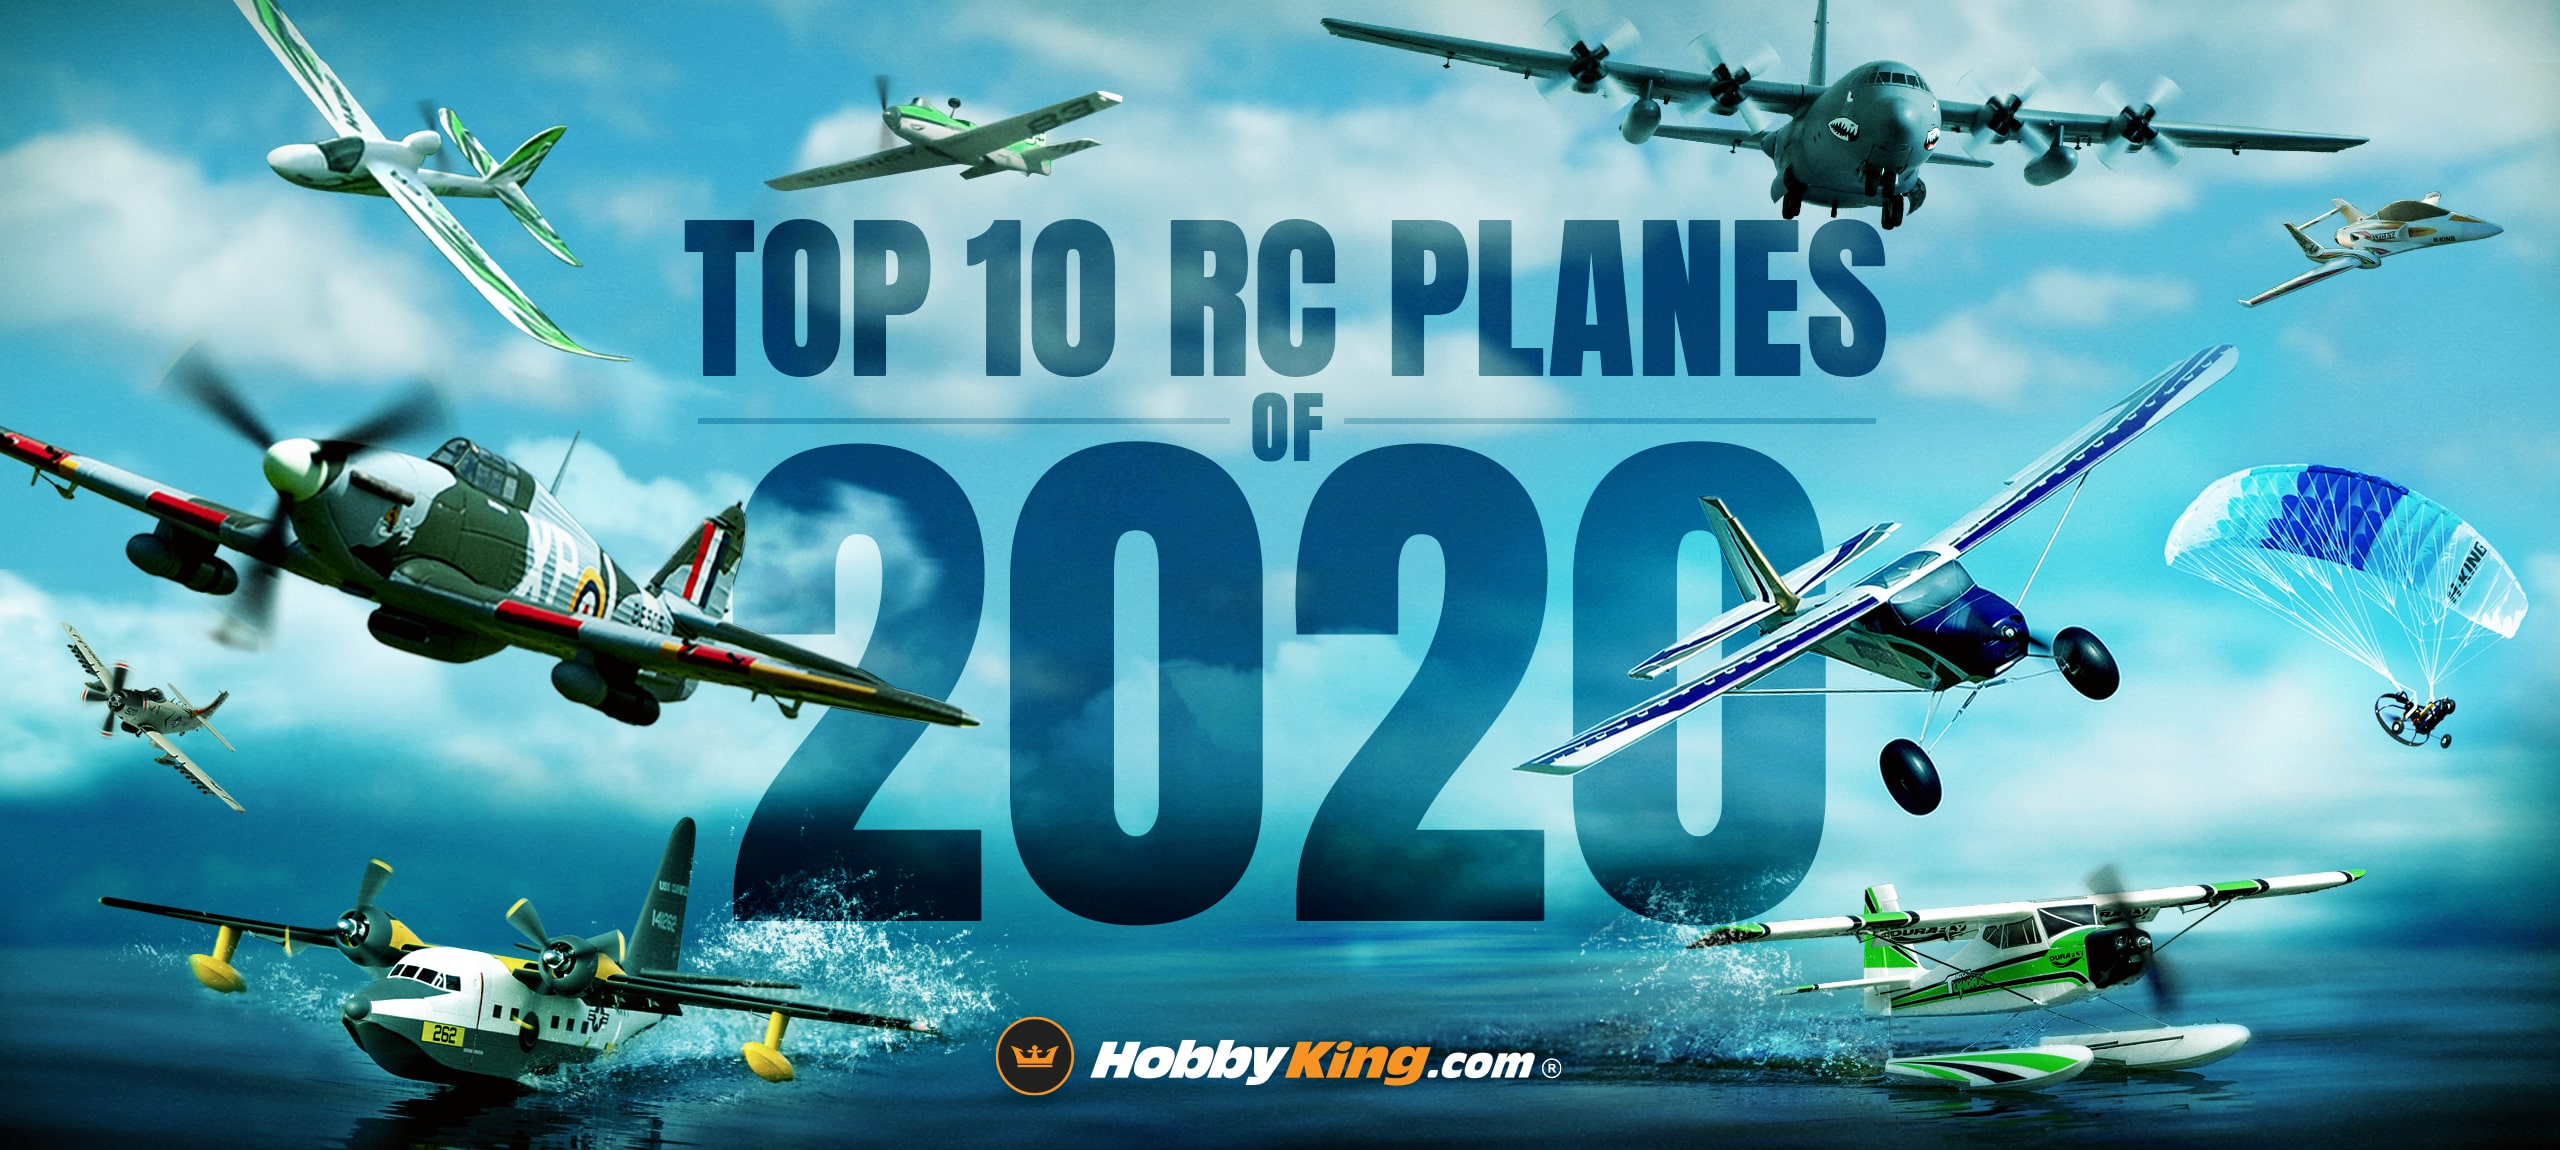 Baglæns Først tyv Blog - HobbyKing Top 10 RC Planes of 2020